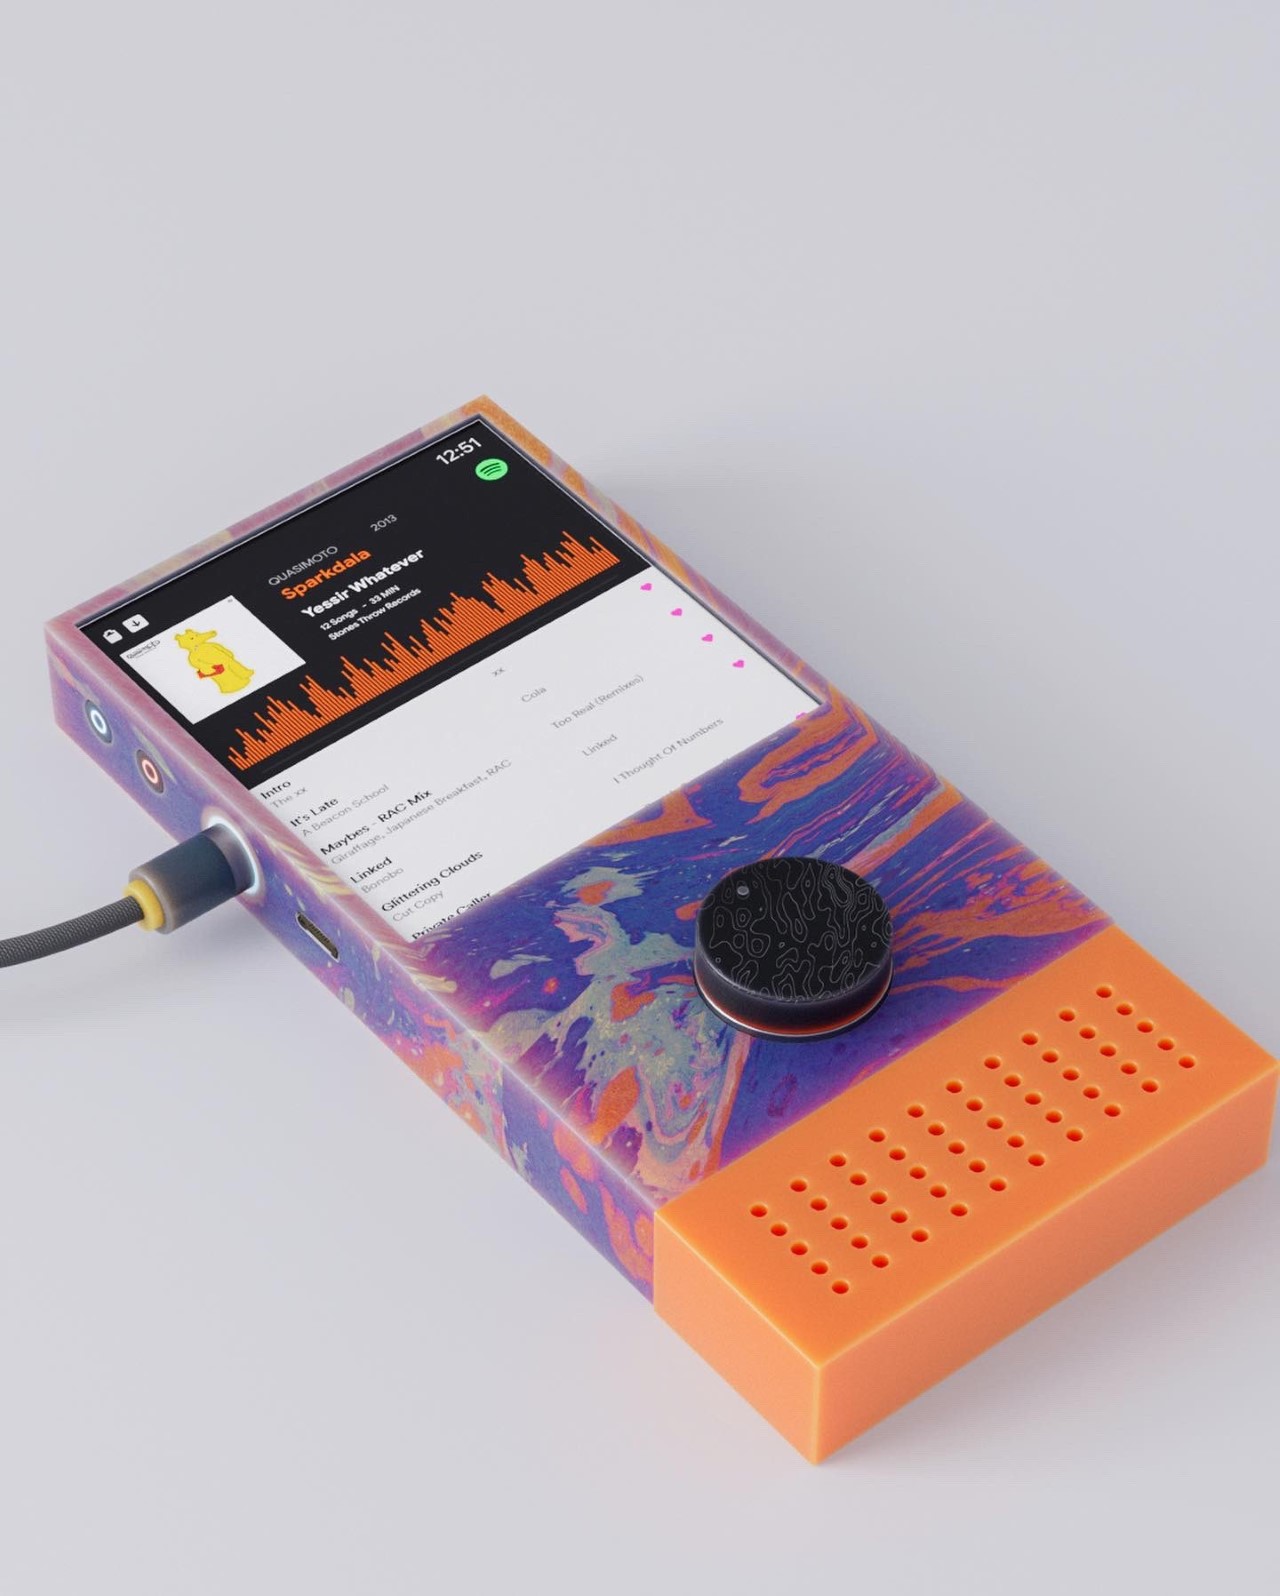 Toronto startup invents Bluetooth speaker beer holder